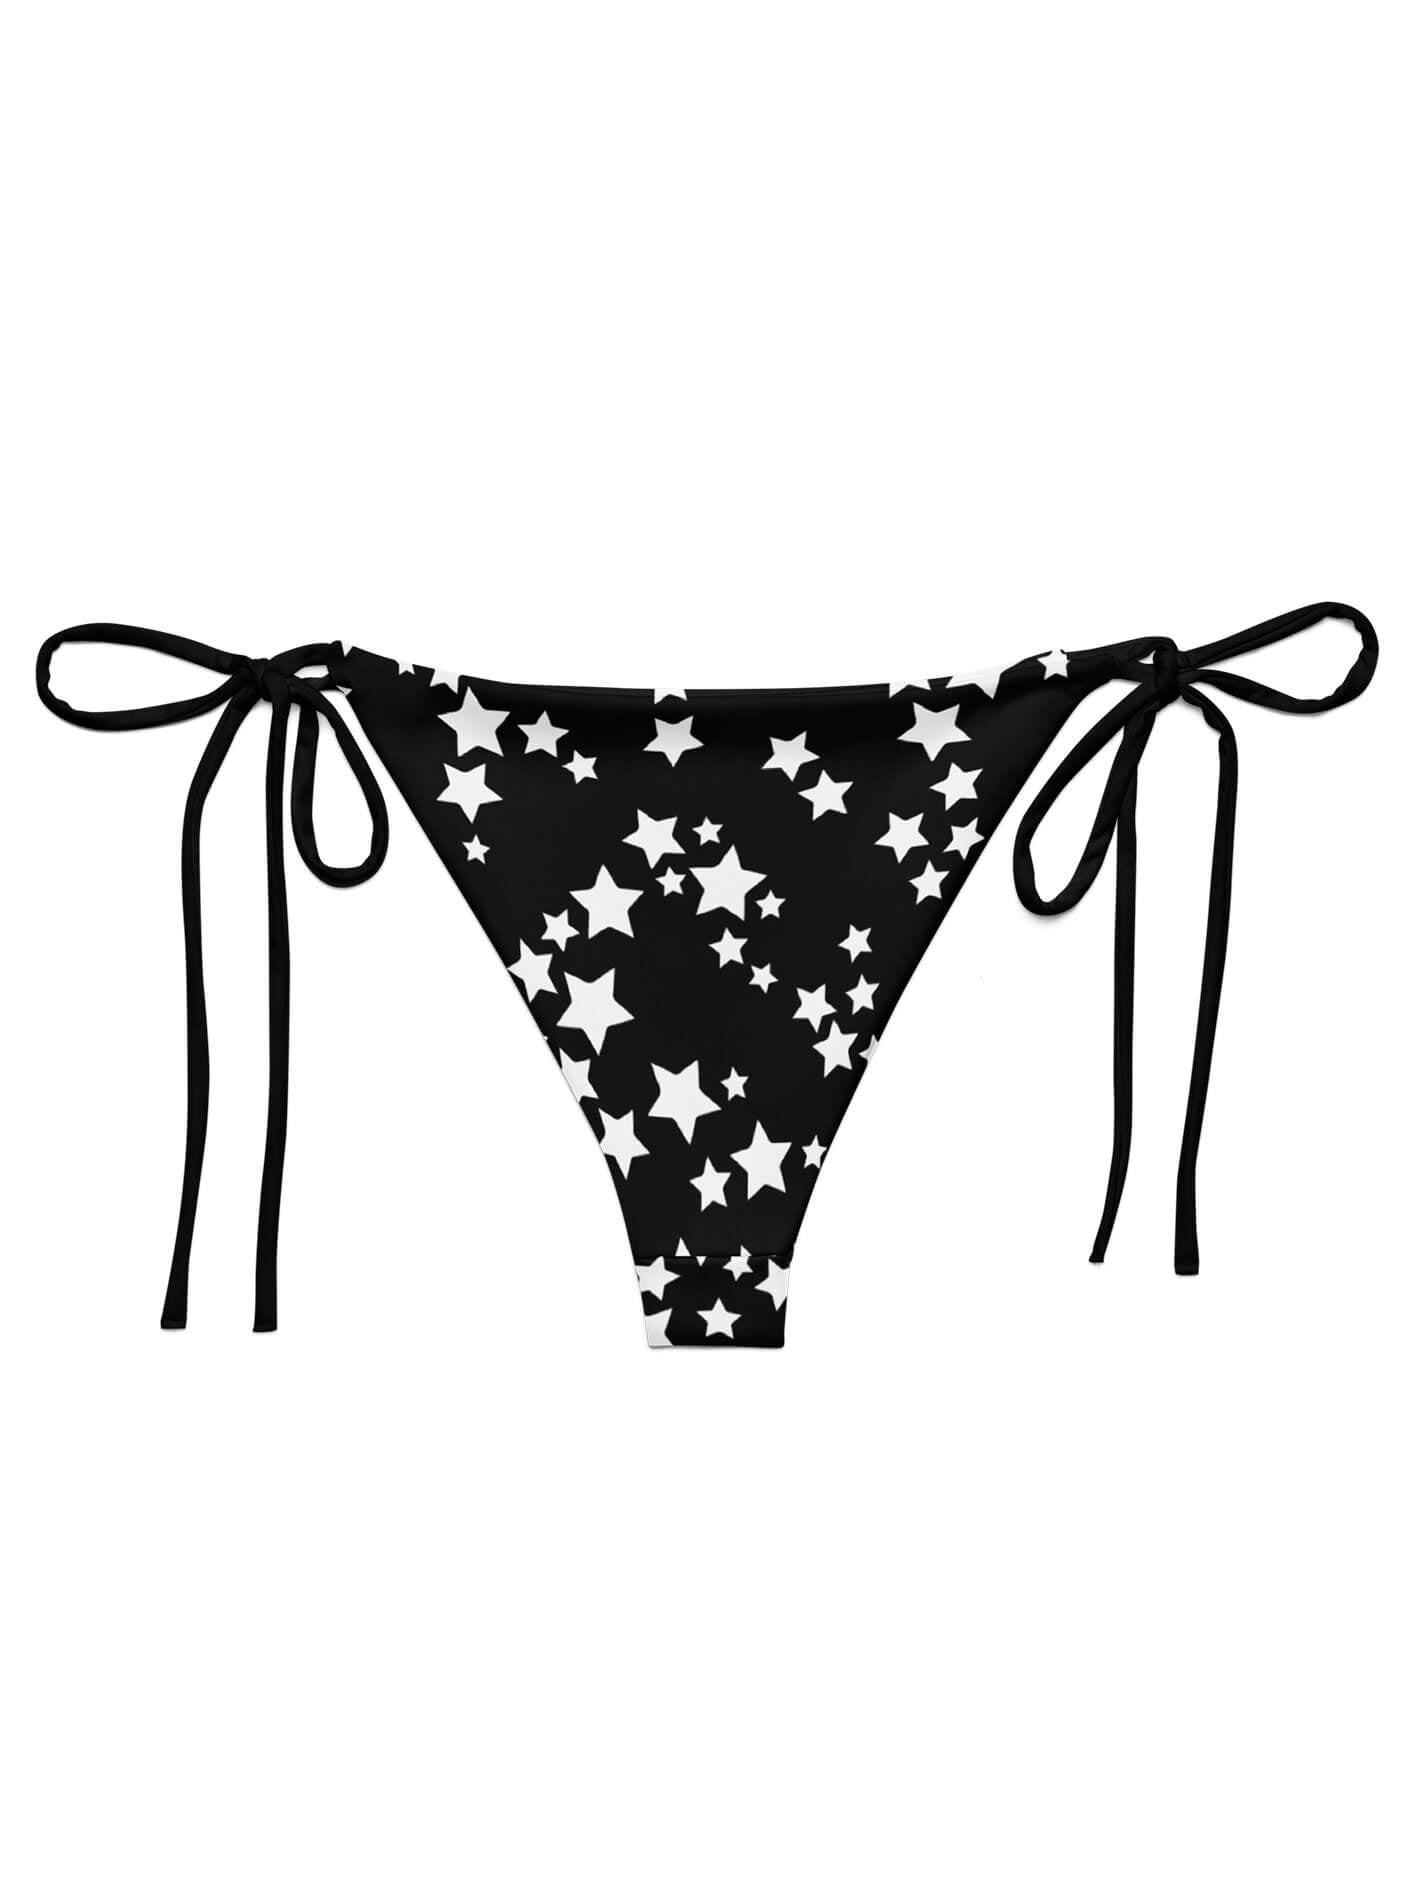 Black star print plus size bikini bottom.